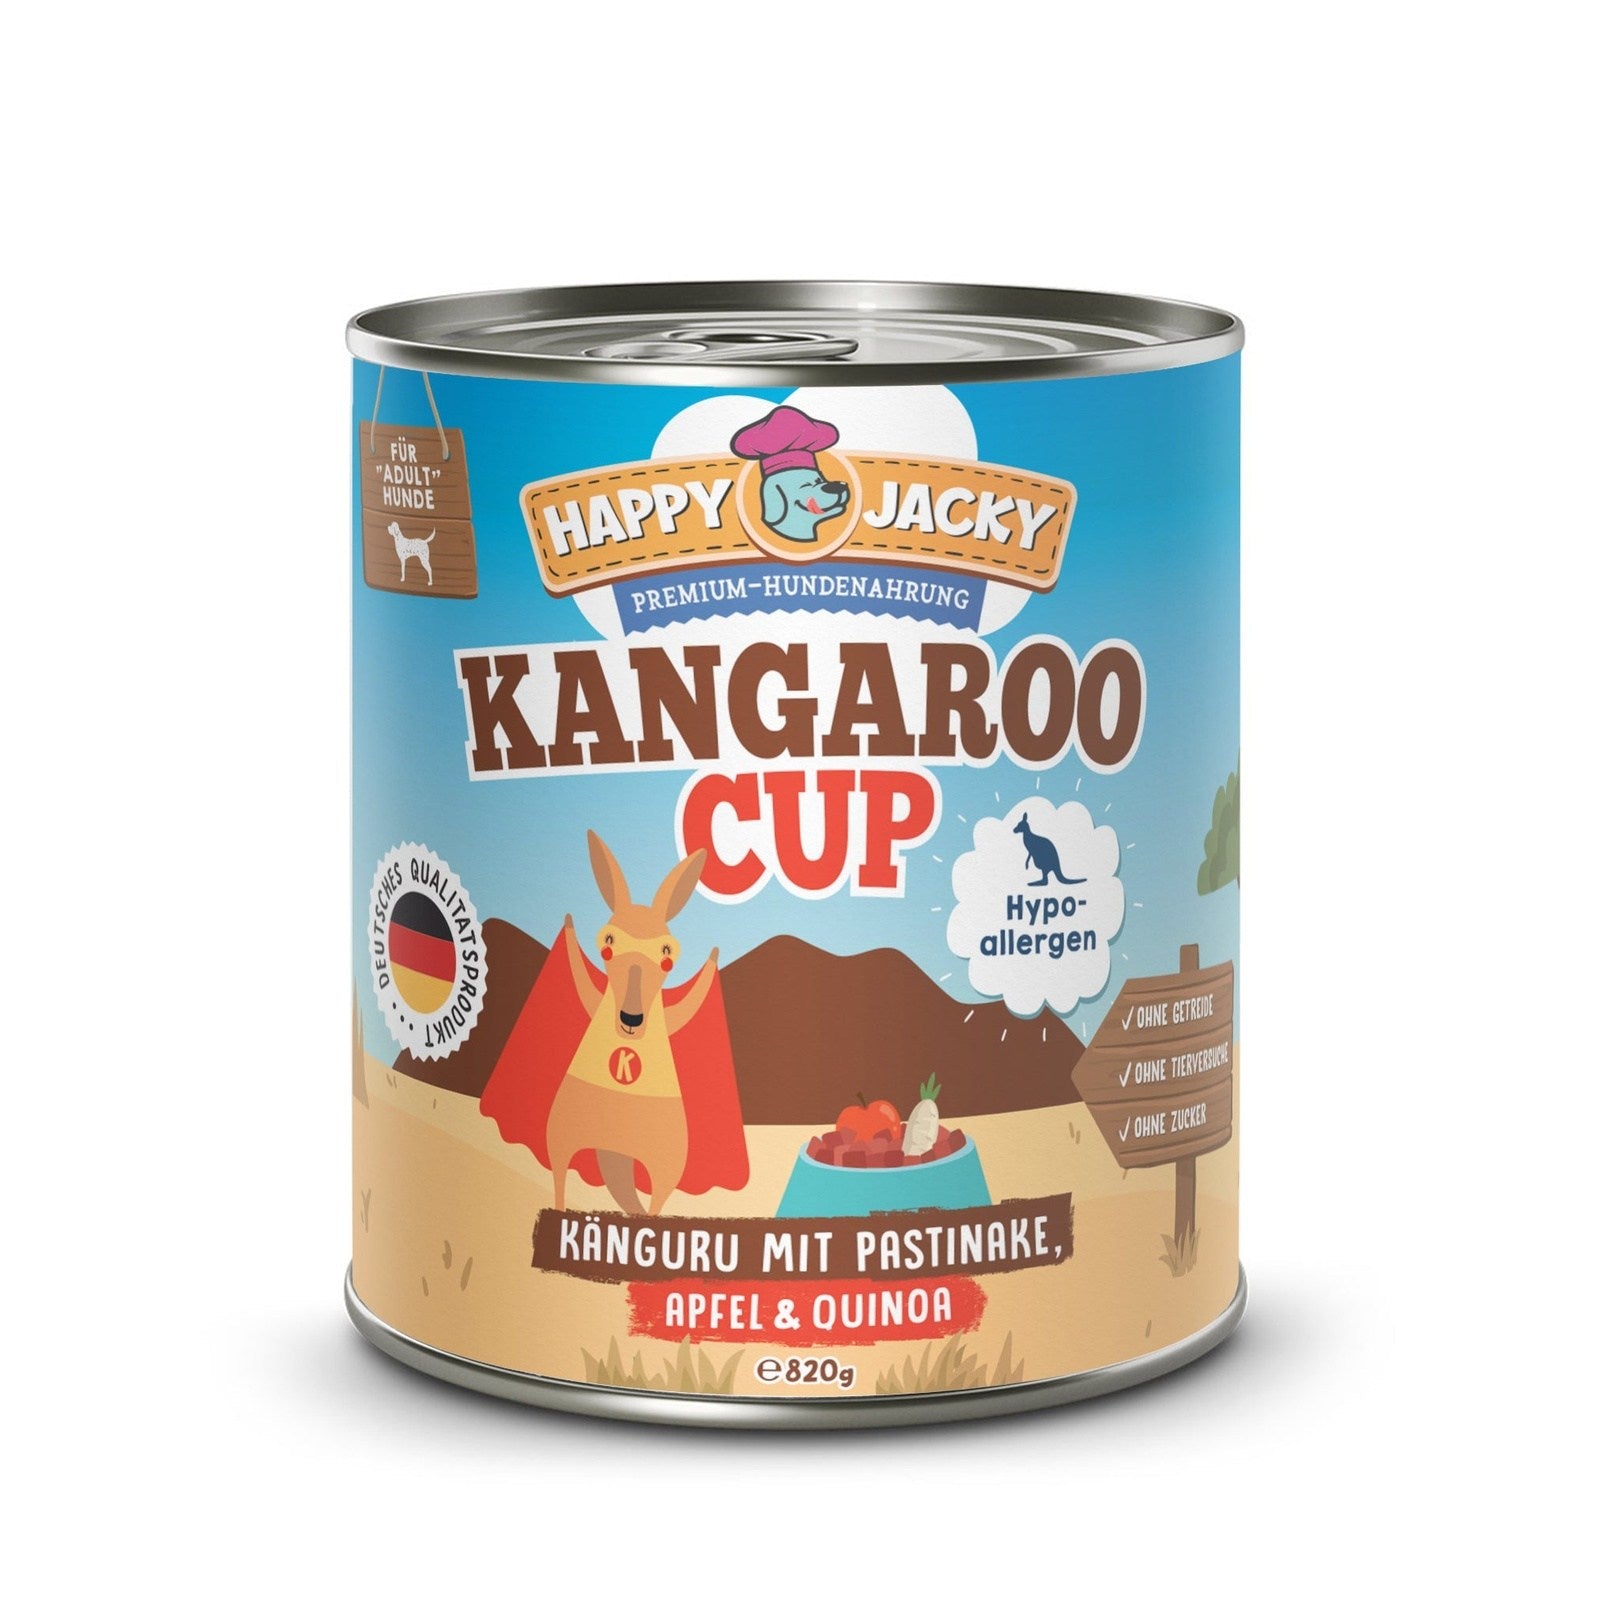 Kangaroo Cup - Känguru mit Pastinake, Apfel & Quinoa HAPPY JACKY